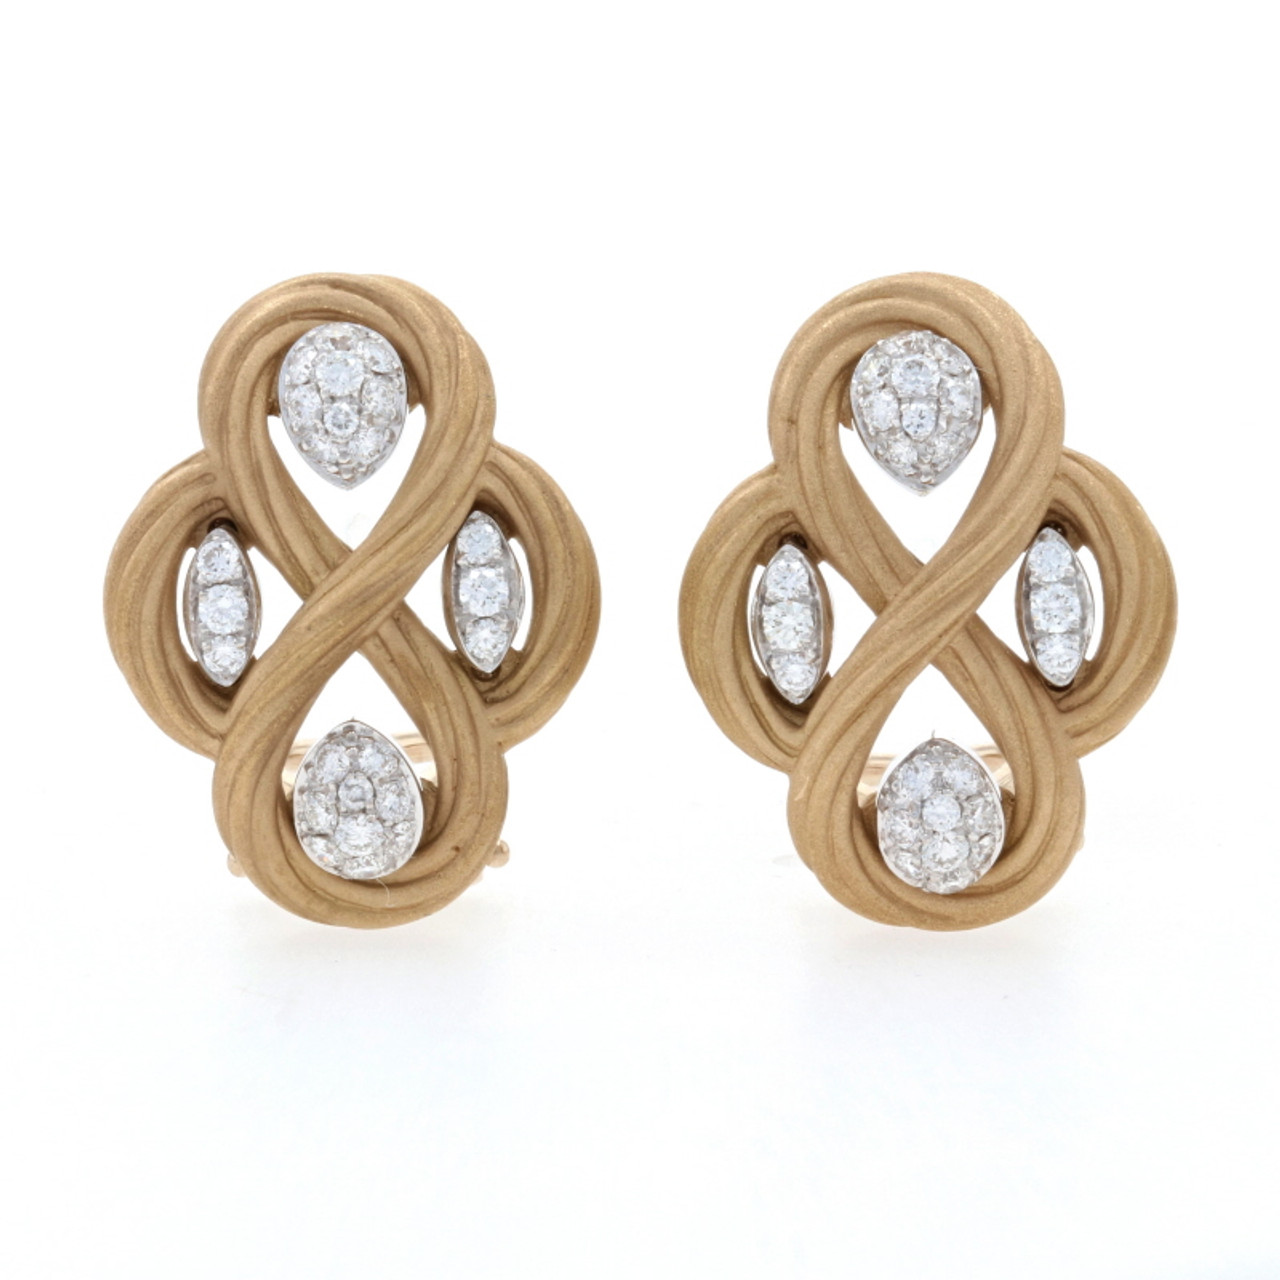 Petite Infinity Stud Earrings in 18K Yellow Gold with Diamonds, 7.8mm |  David Yurman